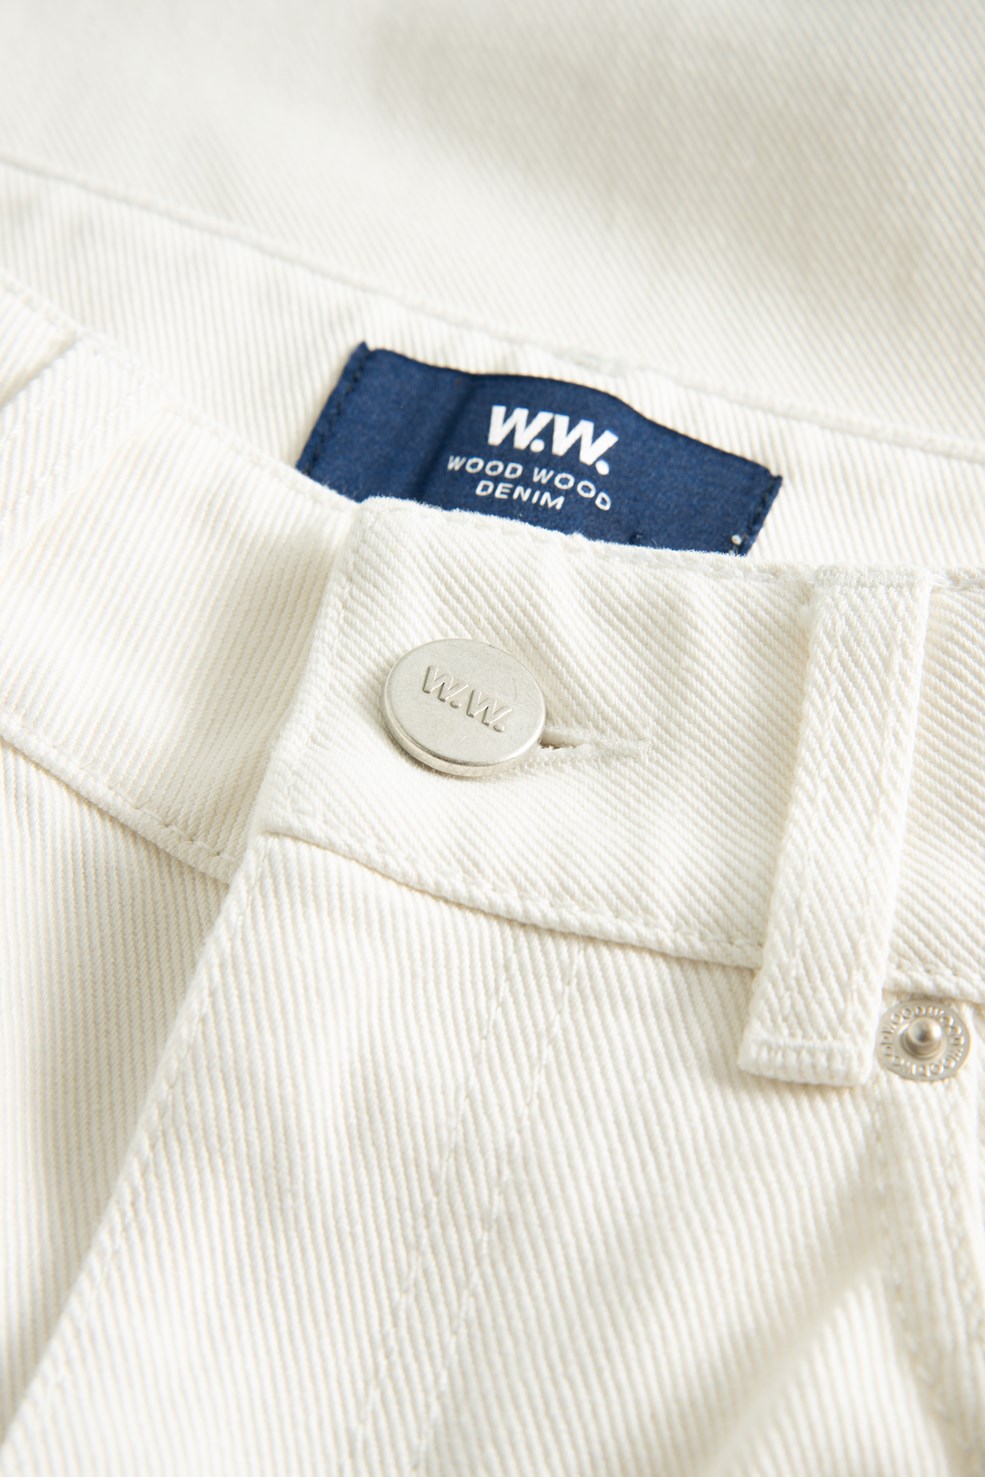 Wood Wood Ilo jeans Off-white | WoodWood.com